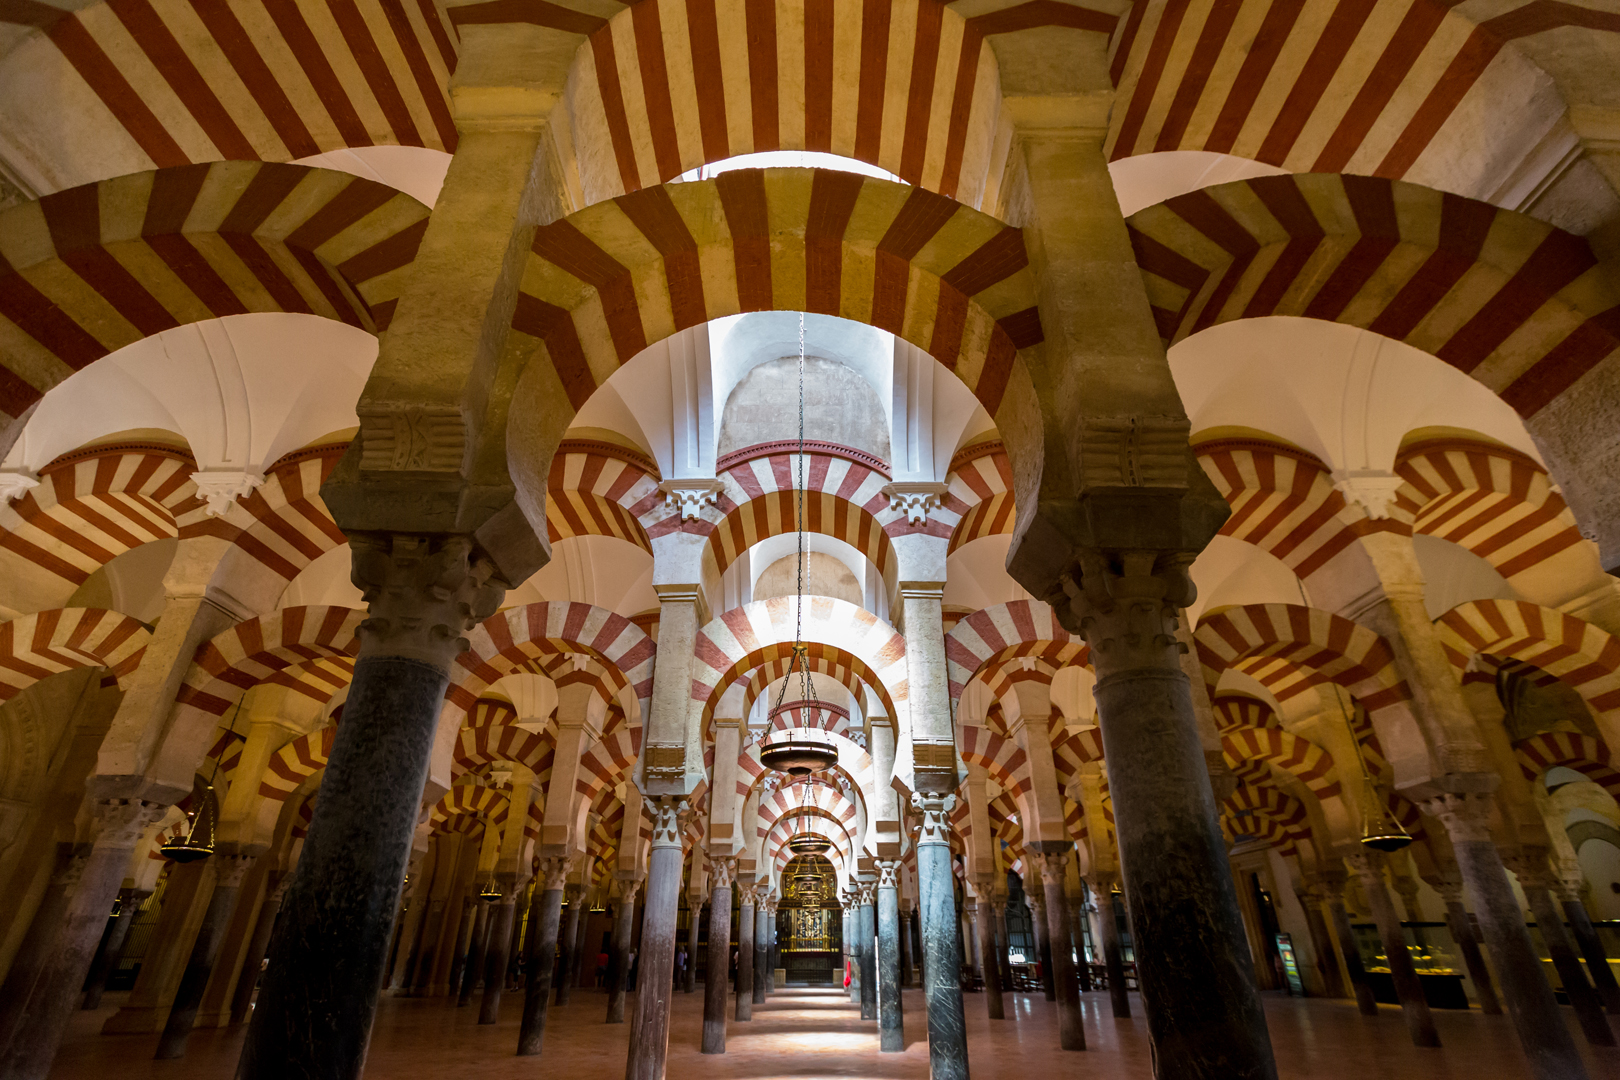 Mezquita Catedral - Cordoba free tour